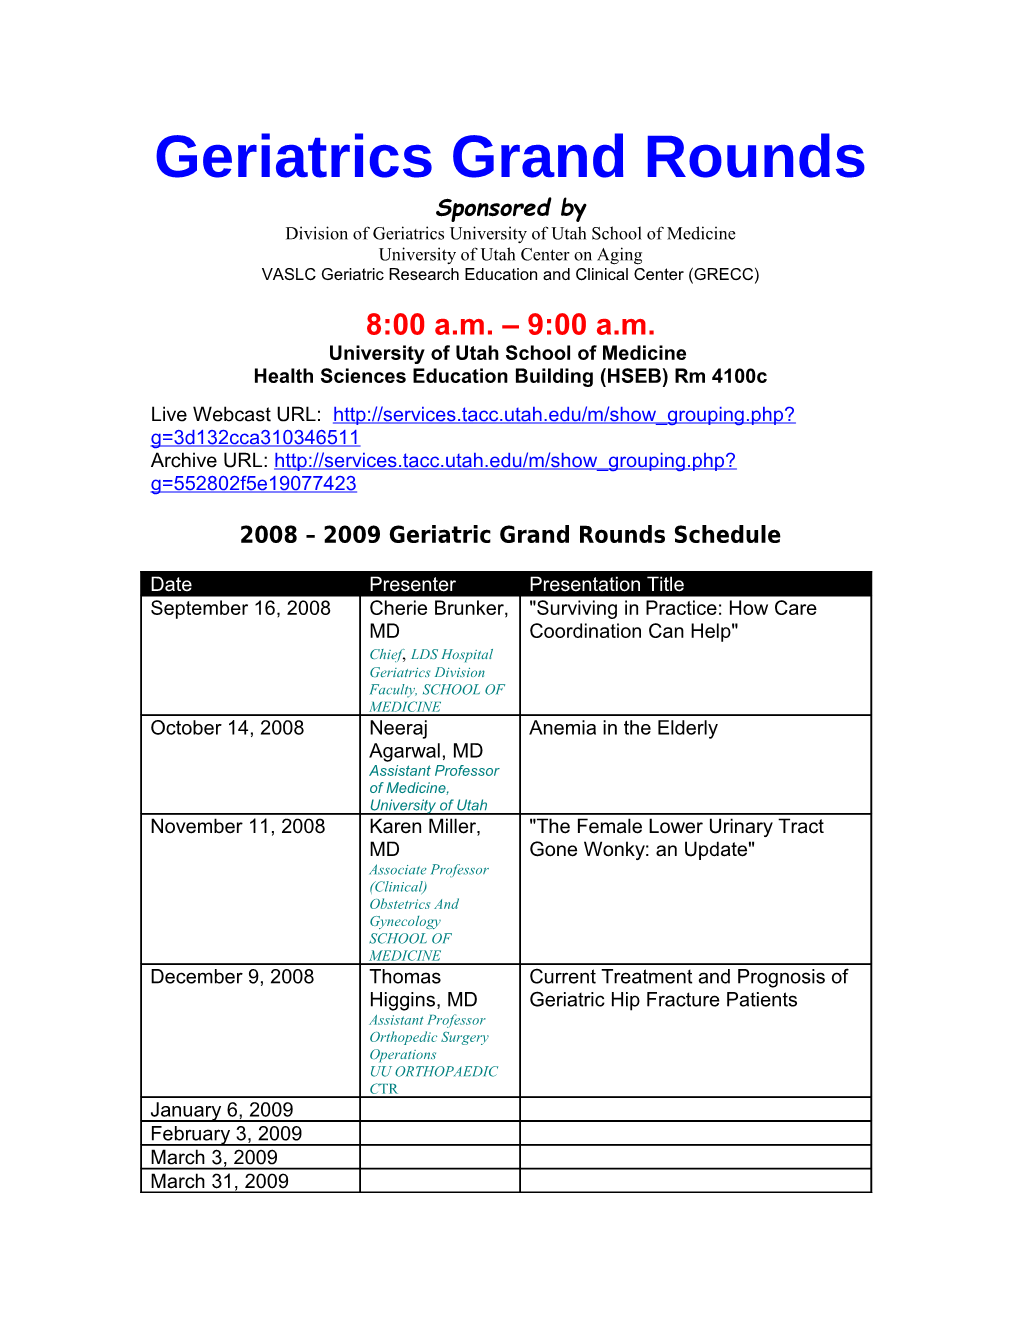 2008-2009 Geriatrics Grand Rounds Schedule